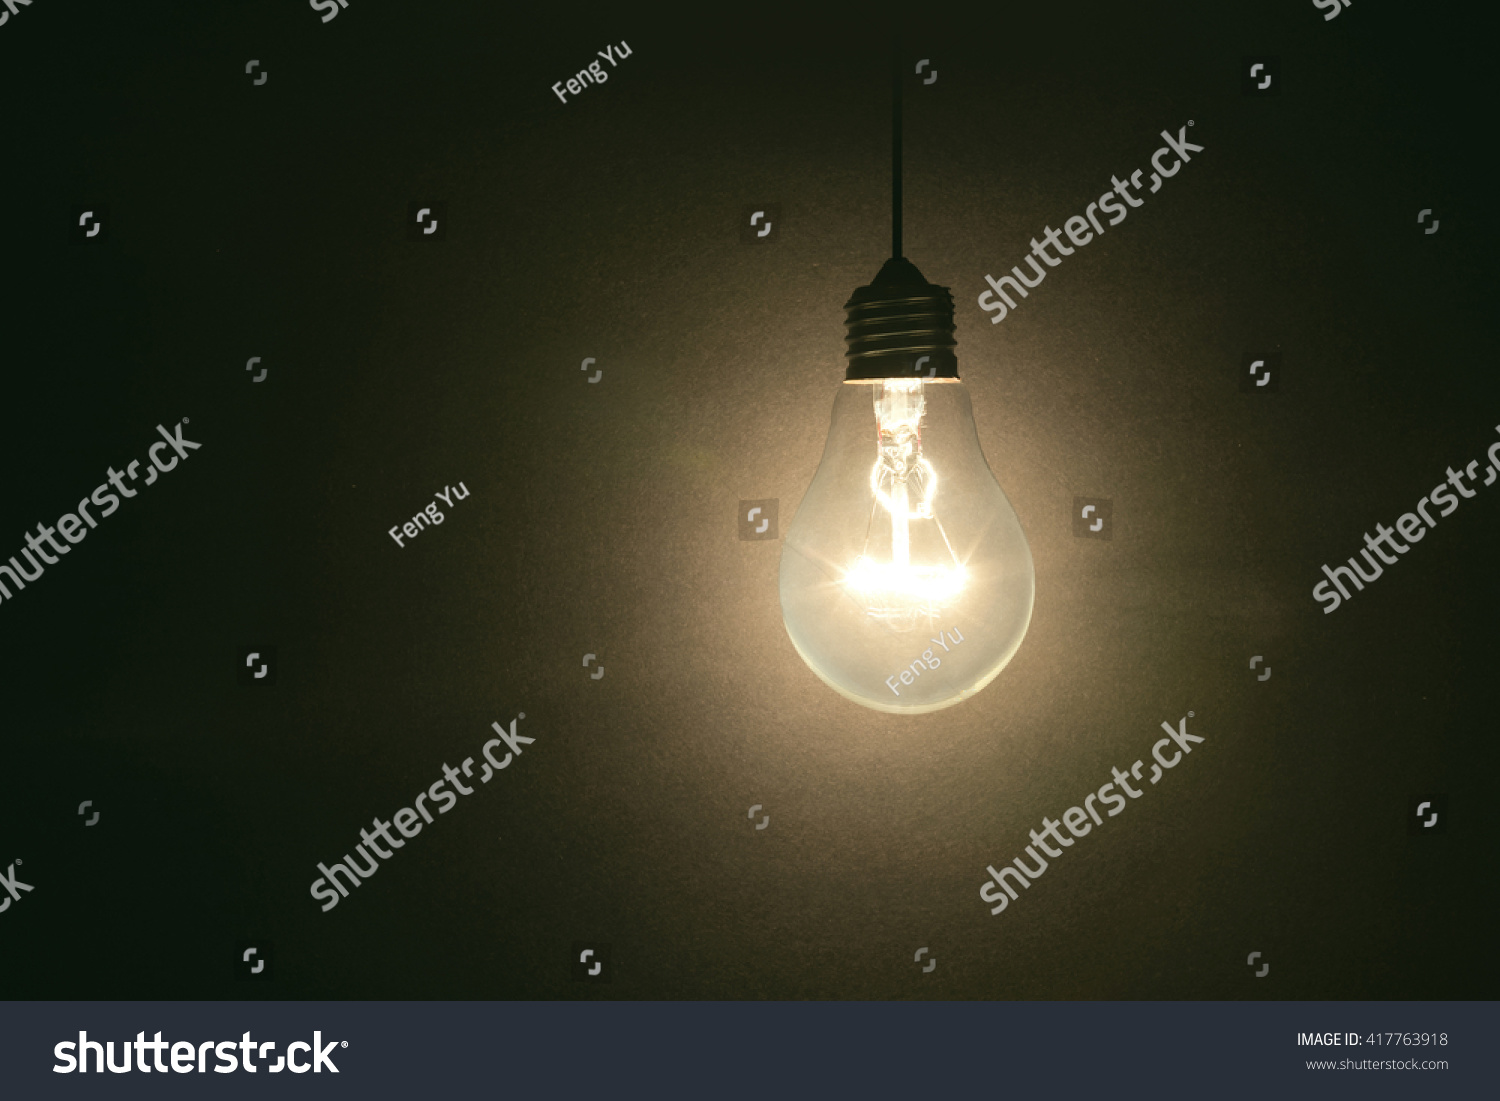 light bulb on dark background, concept of creativity. #417763918